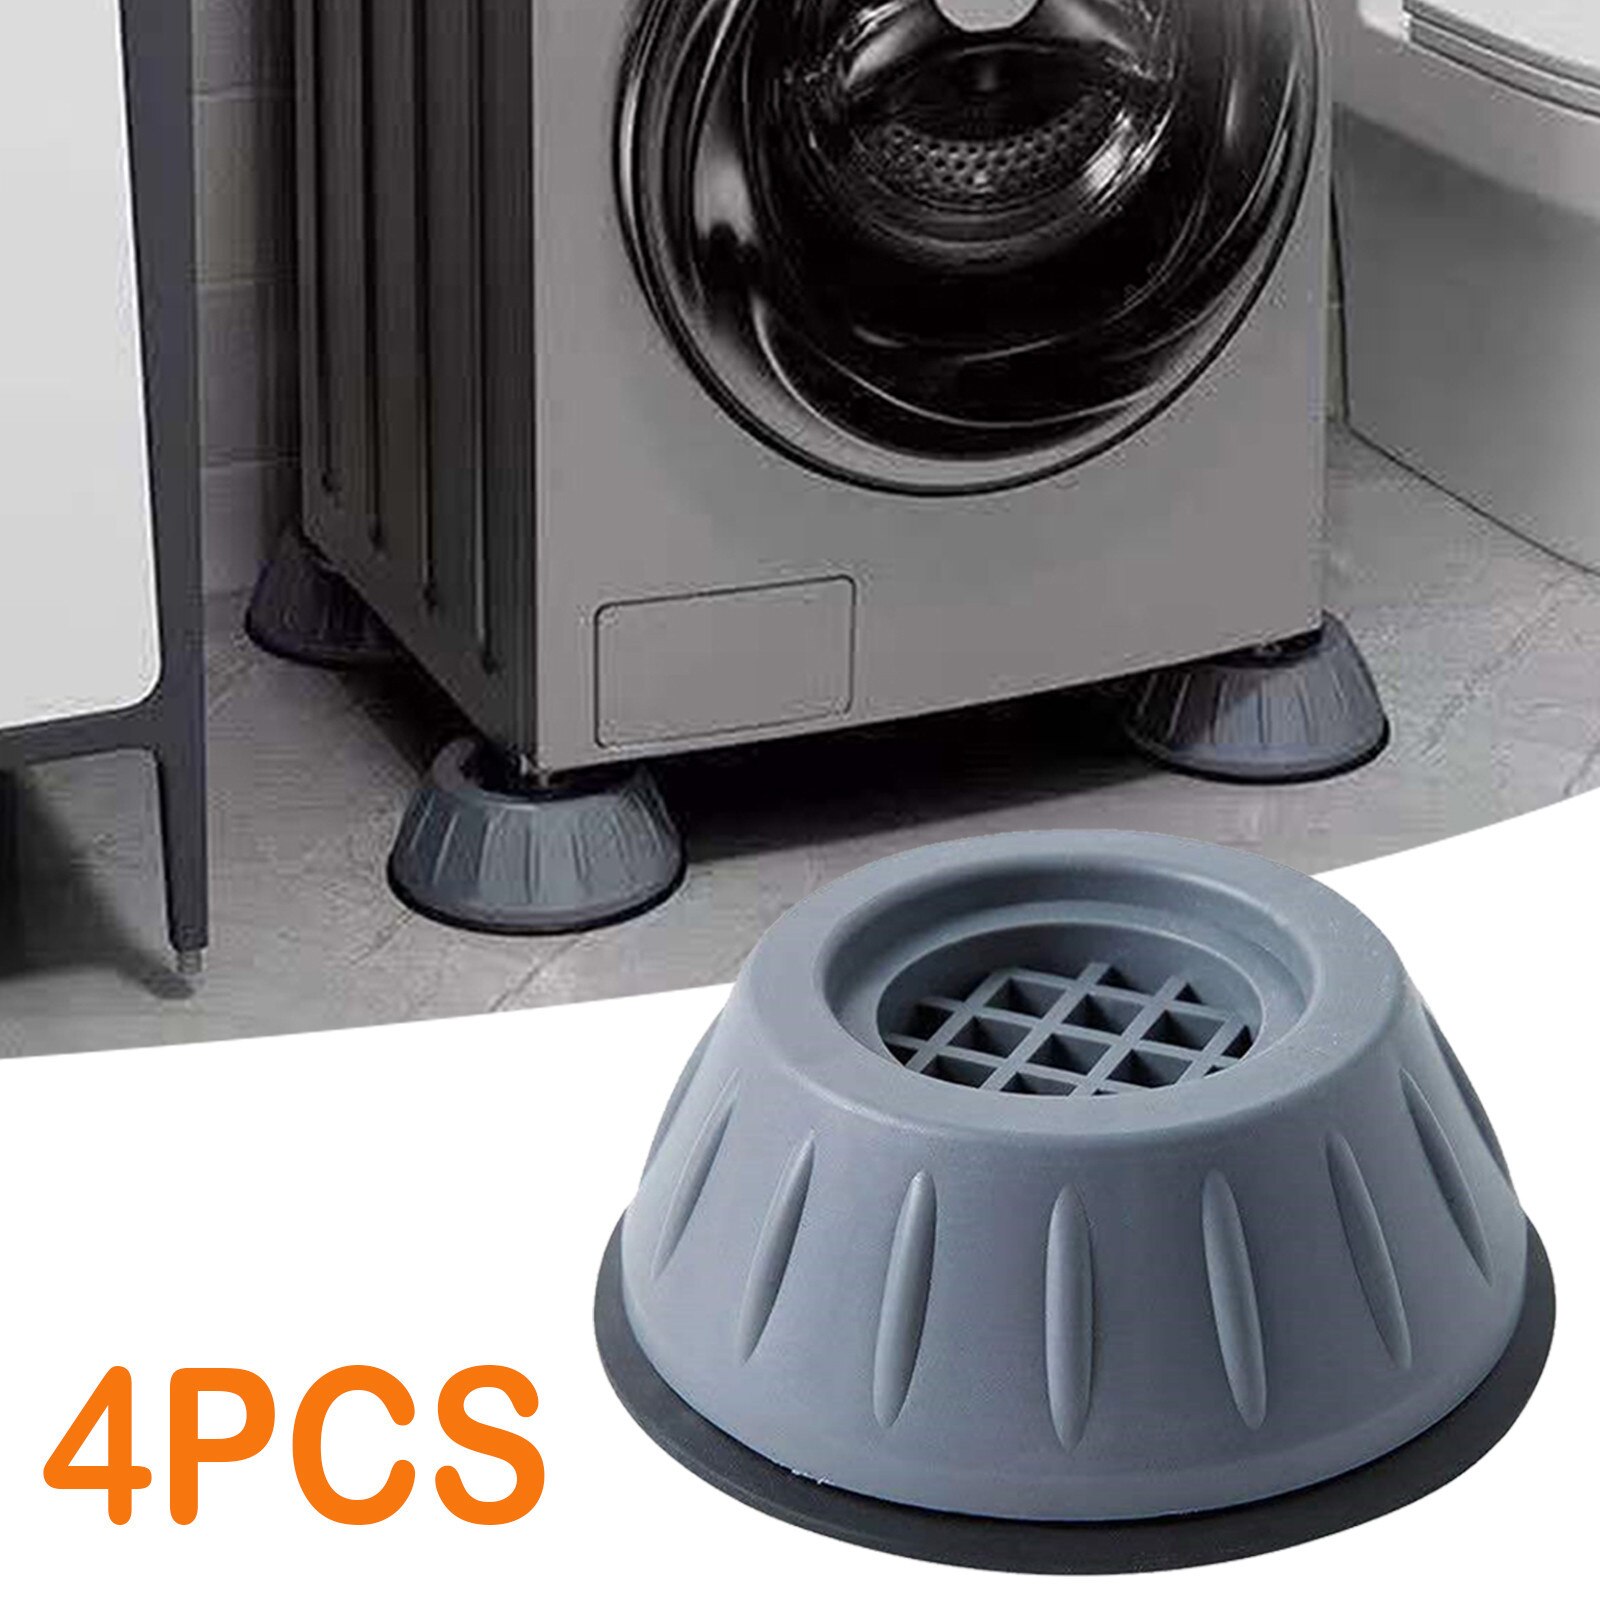 4pcs-Wasmachine-Dempers-Anti-Vibration-Washing-Machine-Support-Washing-Machine-Accessories-Rubber.jpg_Q90.jpg